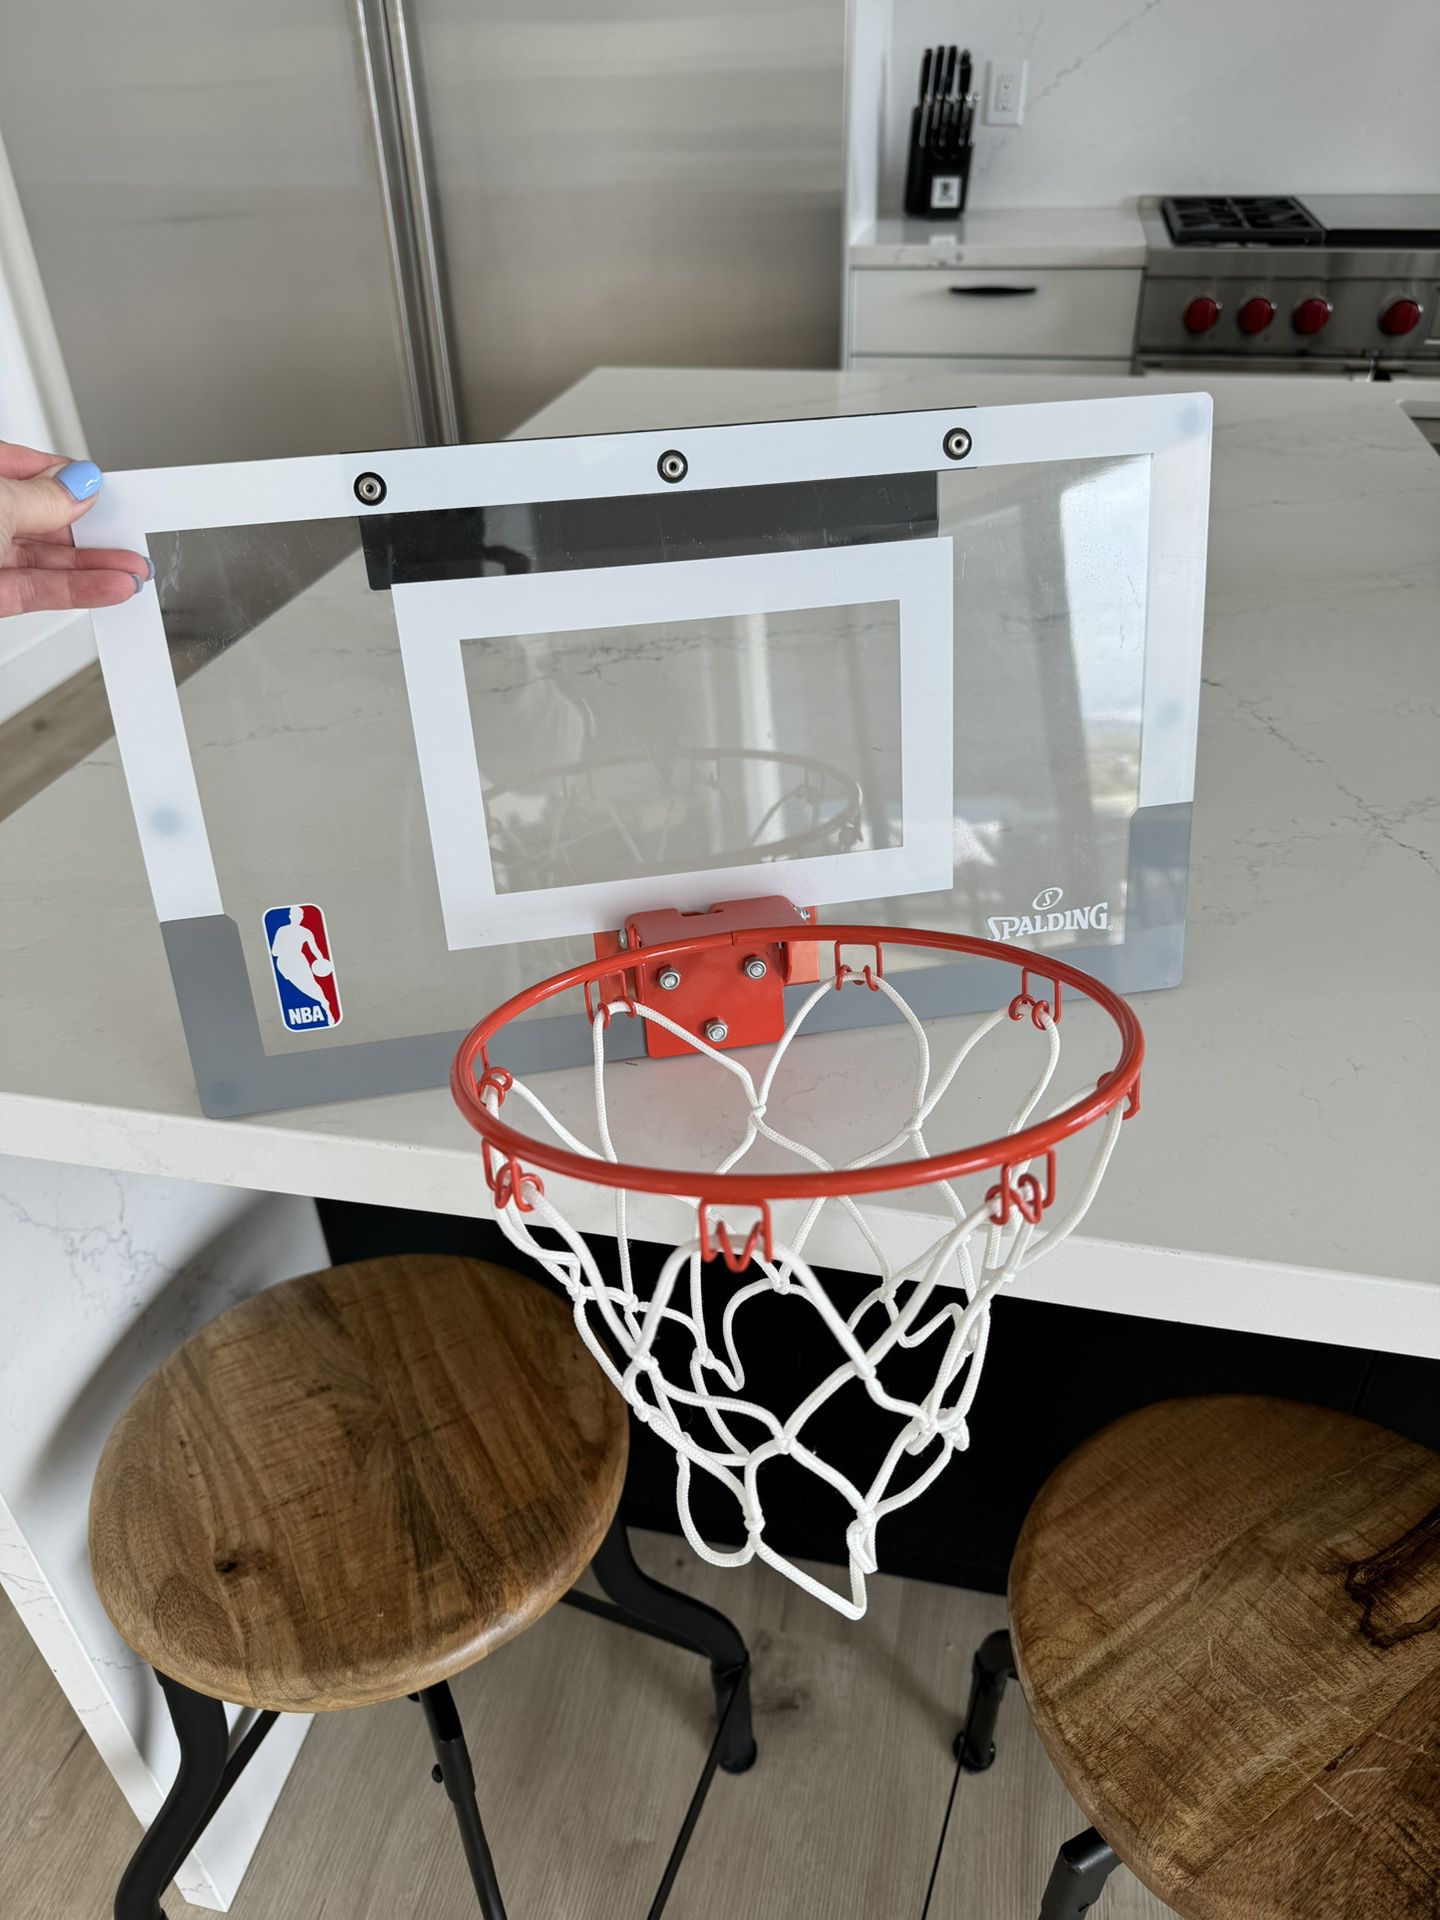 Spalding NBA Basketball Hoop